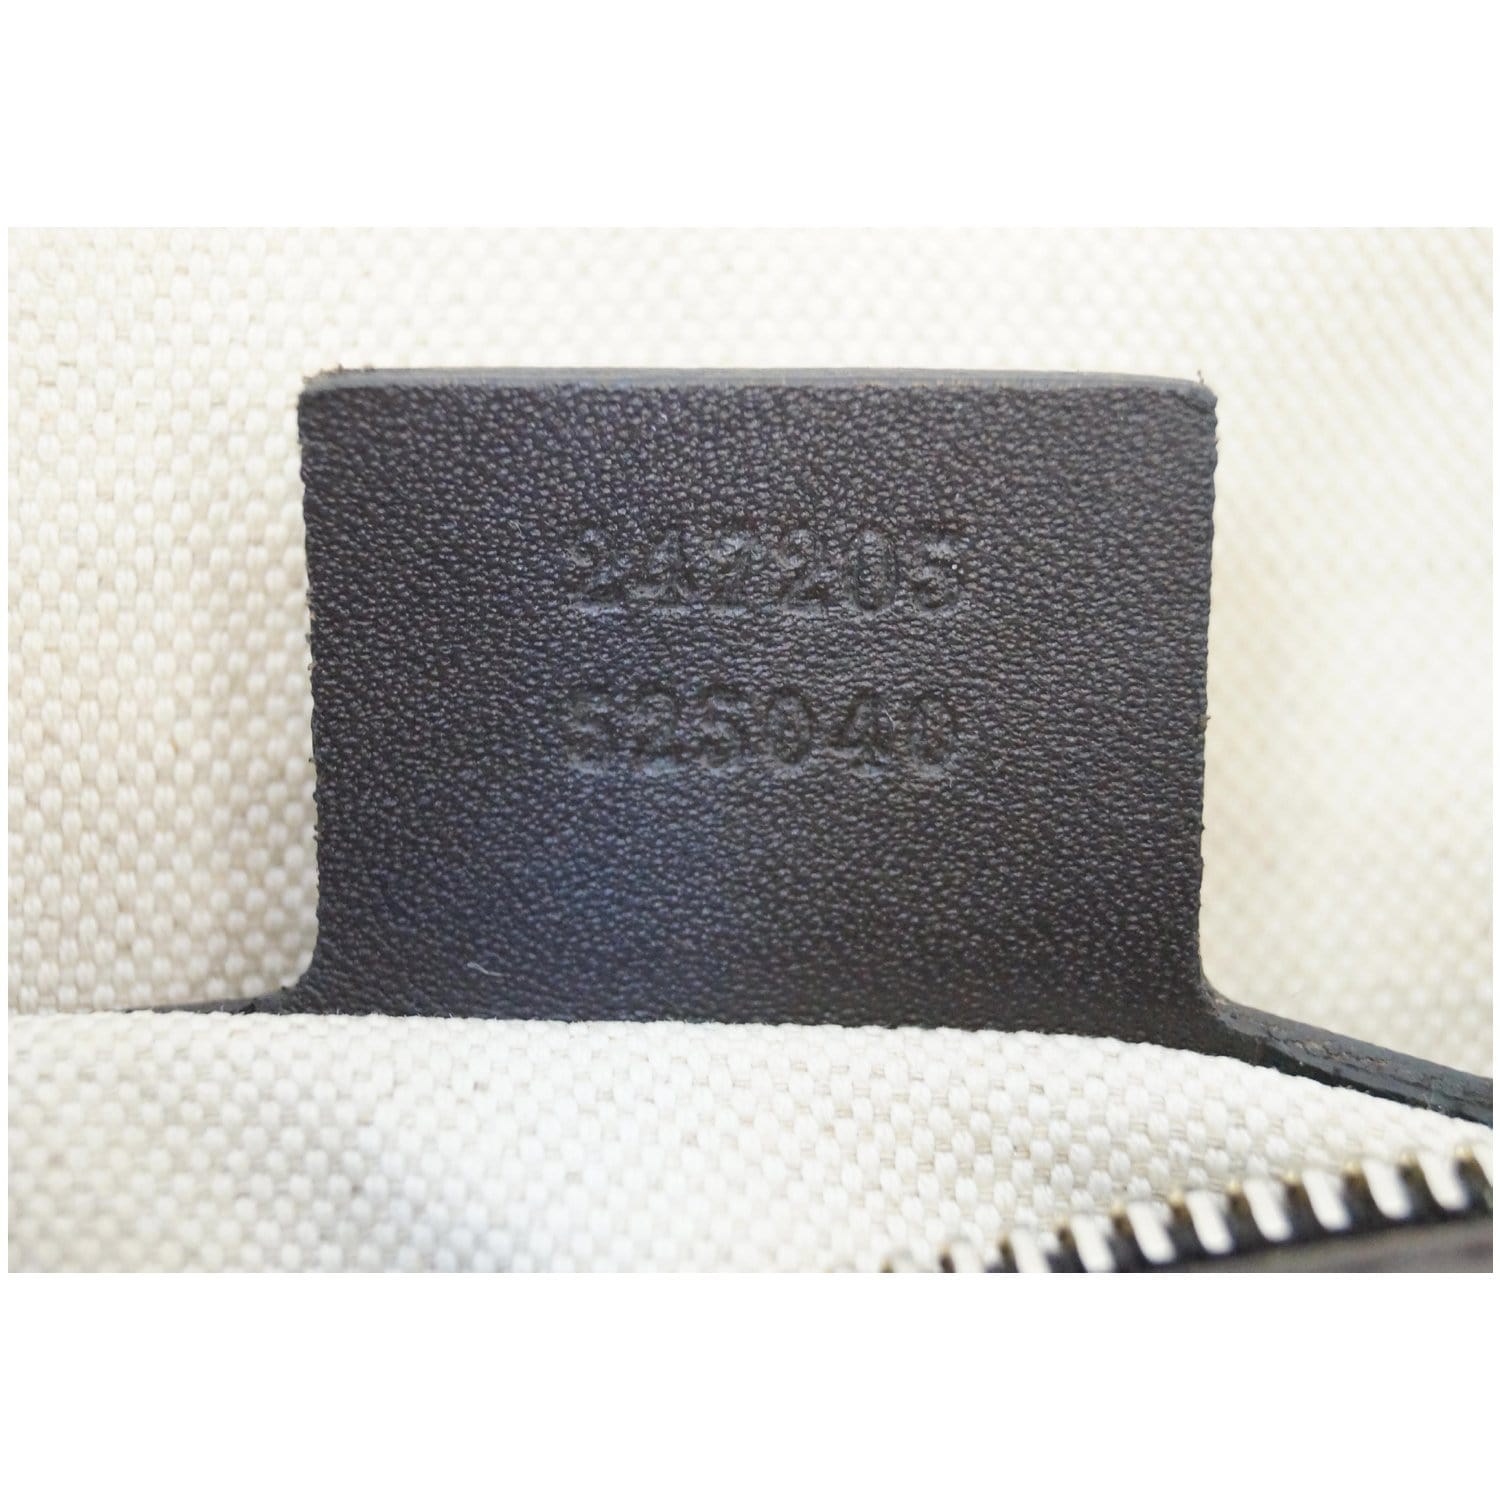 Authenticated Used GUCCI Old Gucci Vintage Mini Boston Bag Handbag